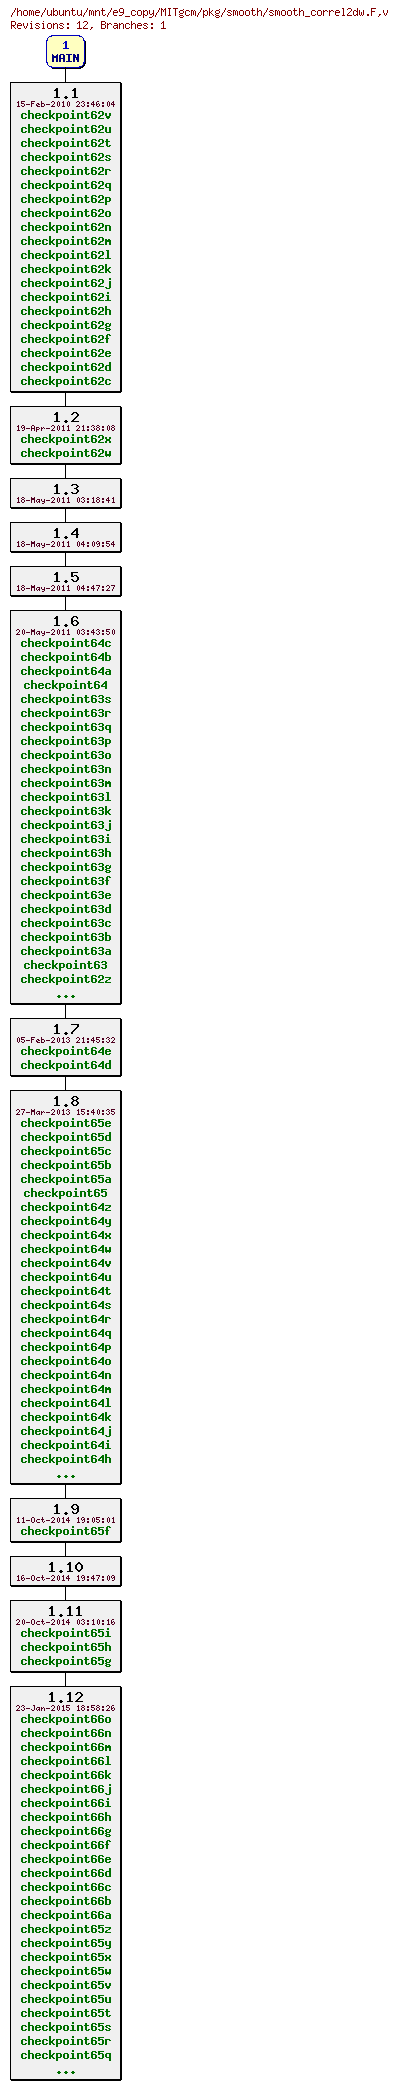 Revisions of MITgcm/pkg/smooth/smooth_correl2dw.F